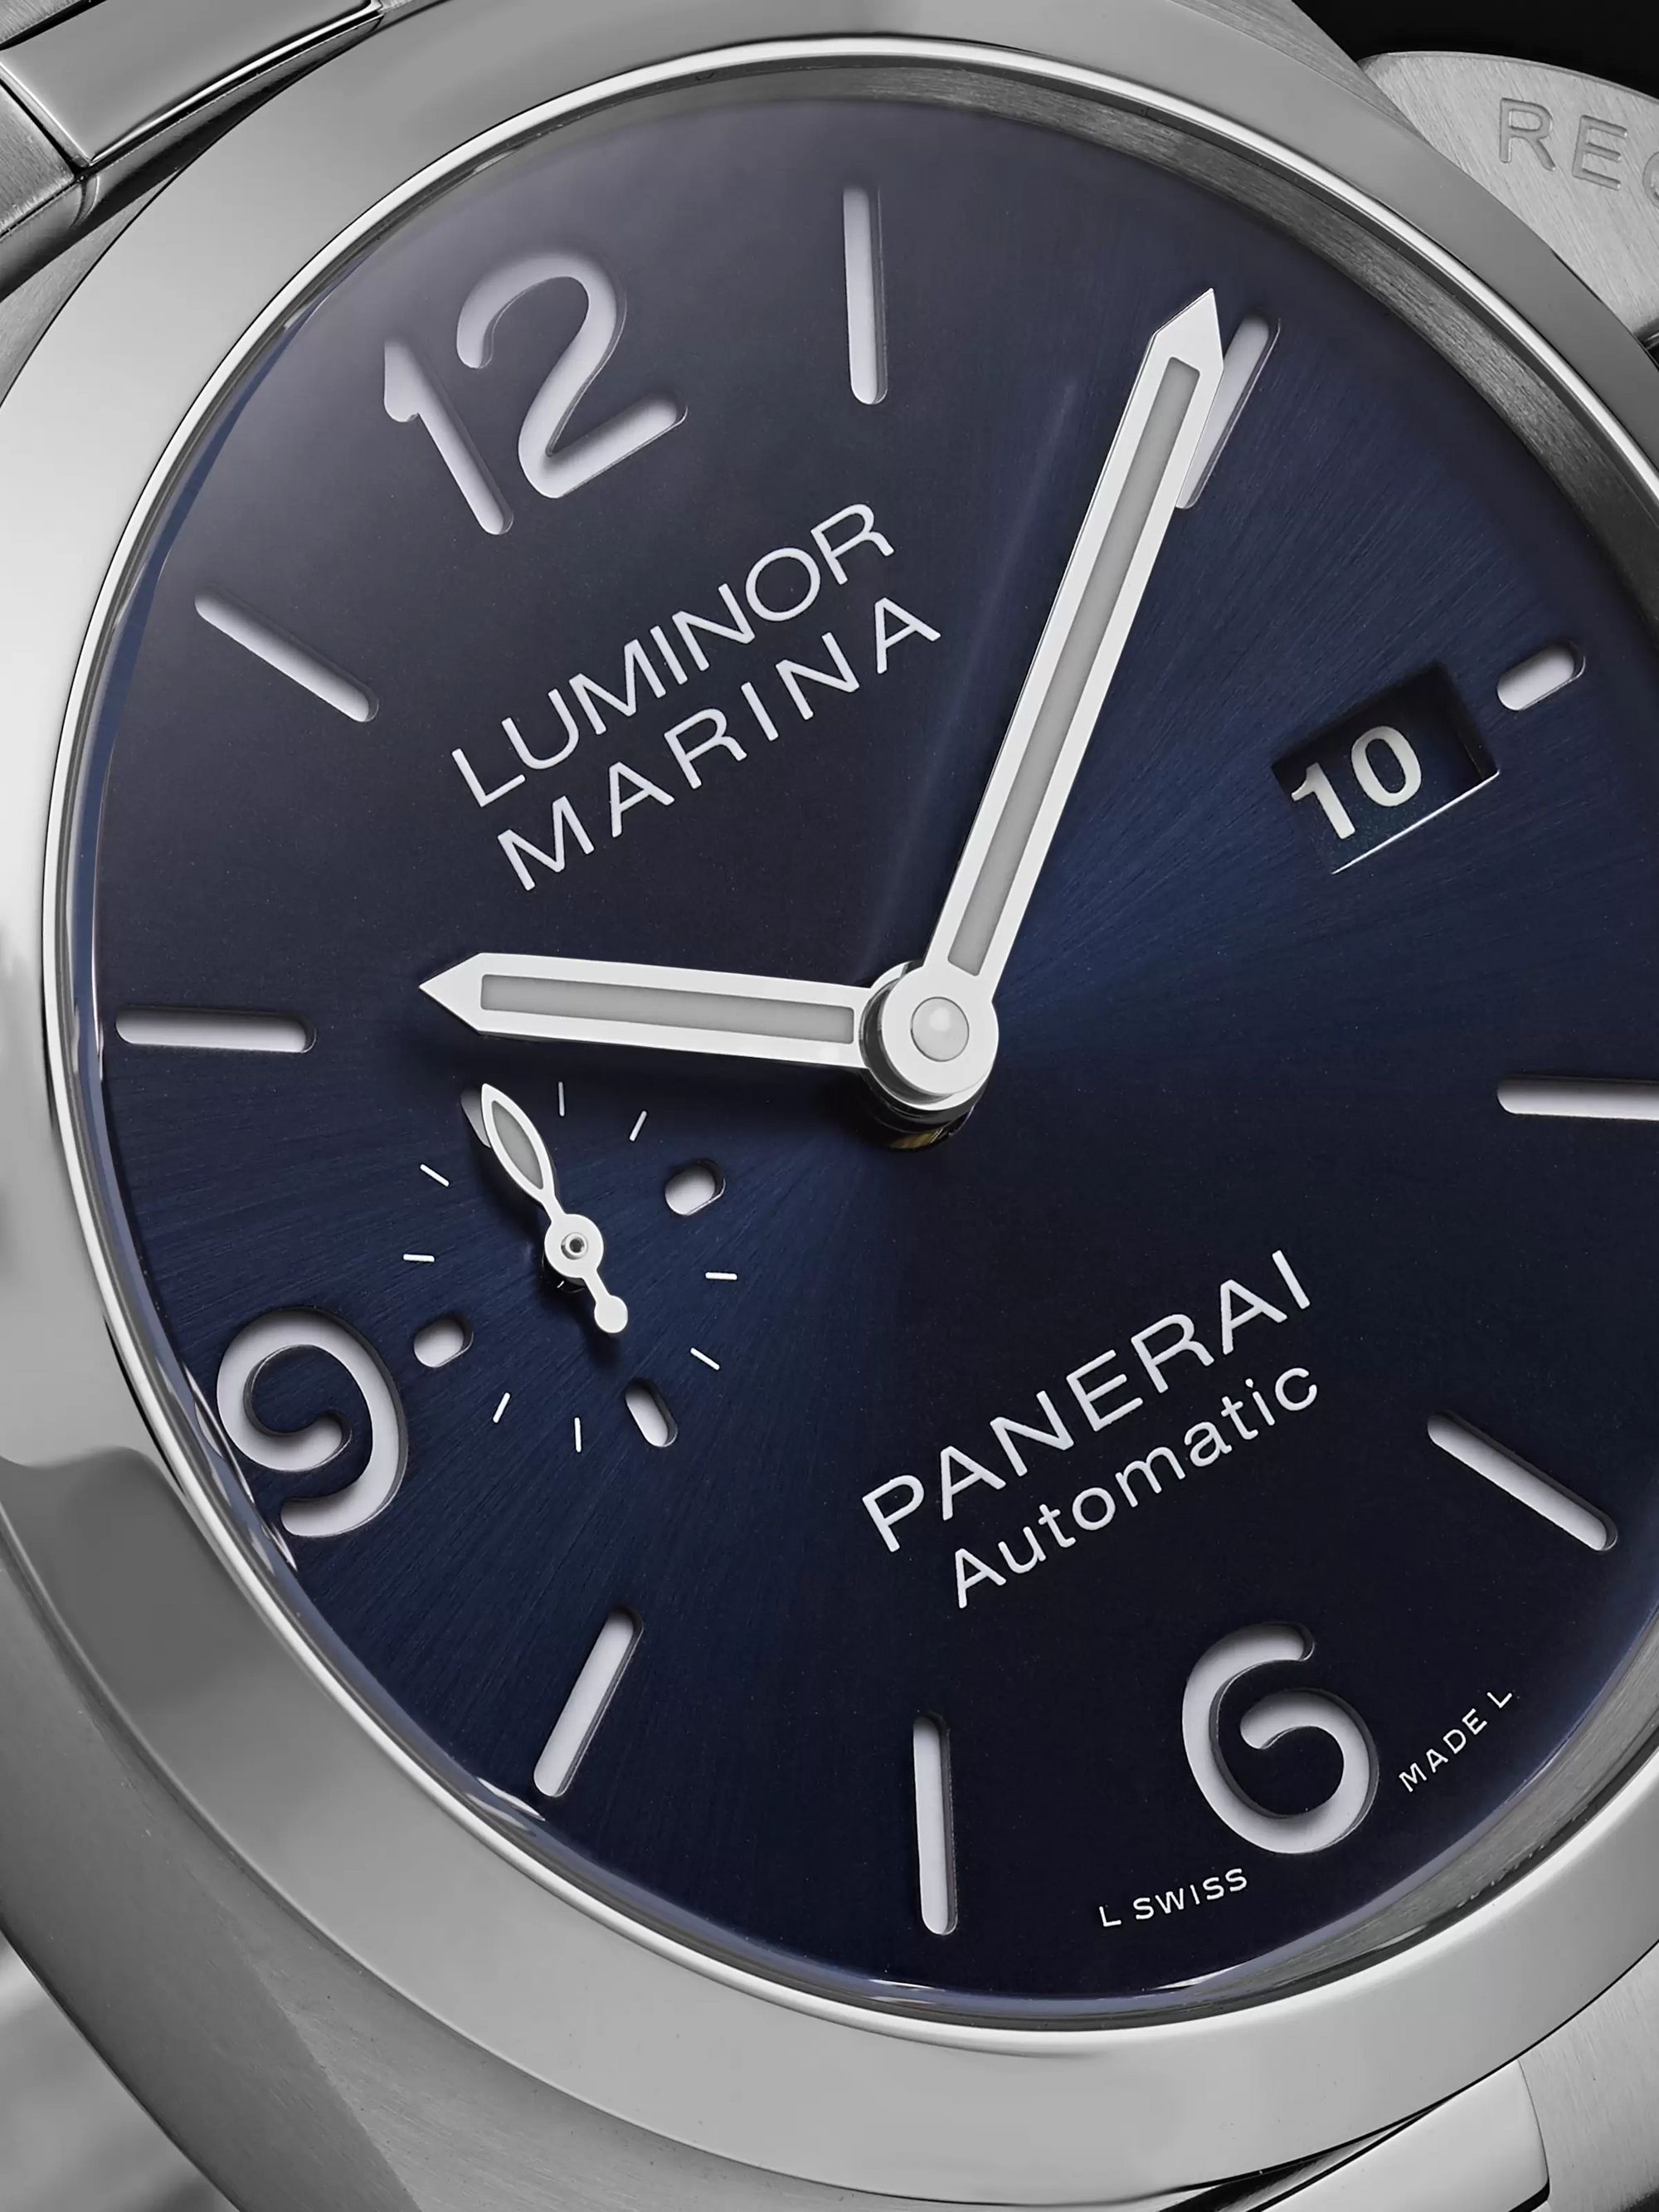 PANERAI Luminor Marina Specchio Blu Automatic 44mm Stainless Steel Watch, Ref. No. PAM01316